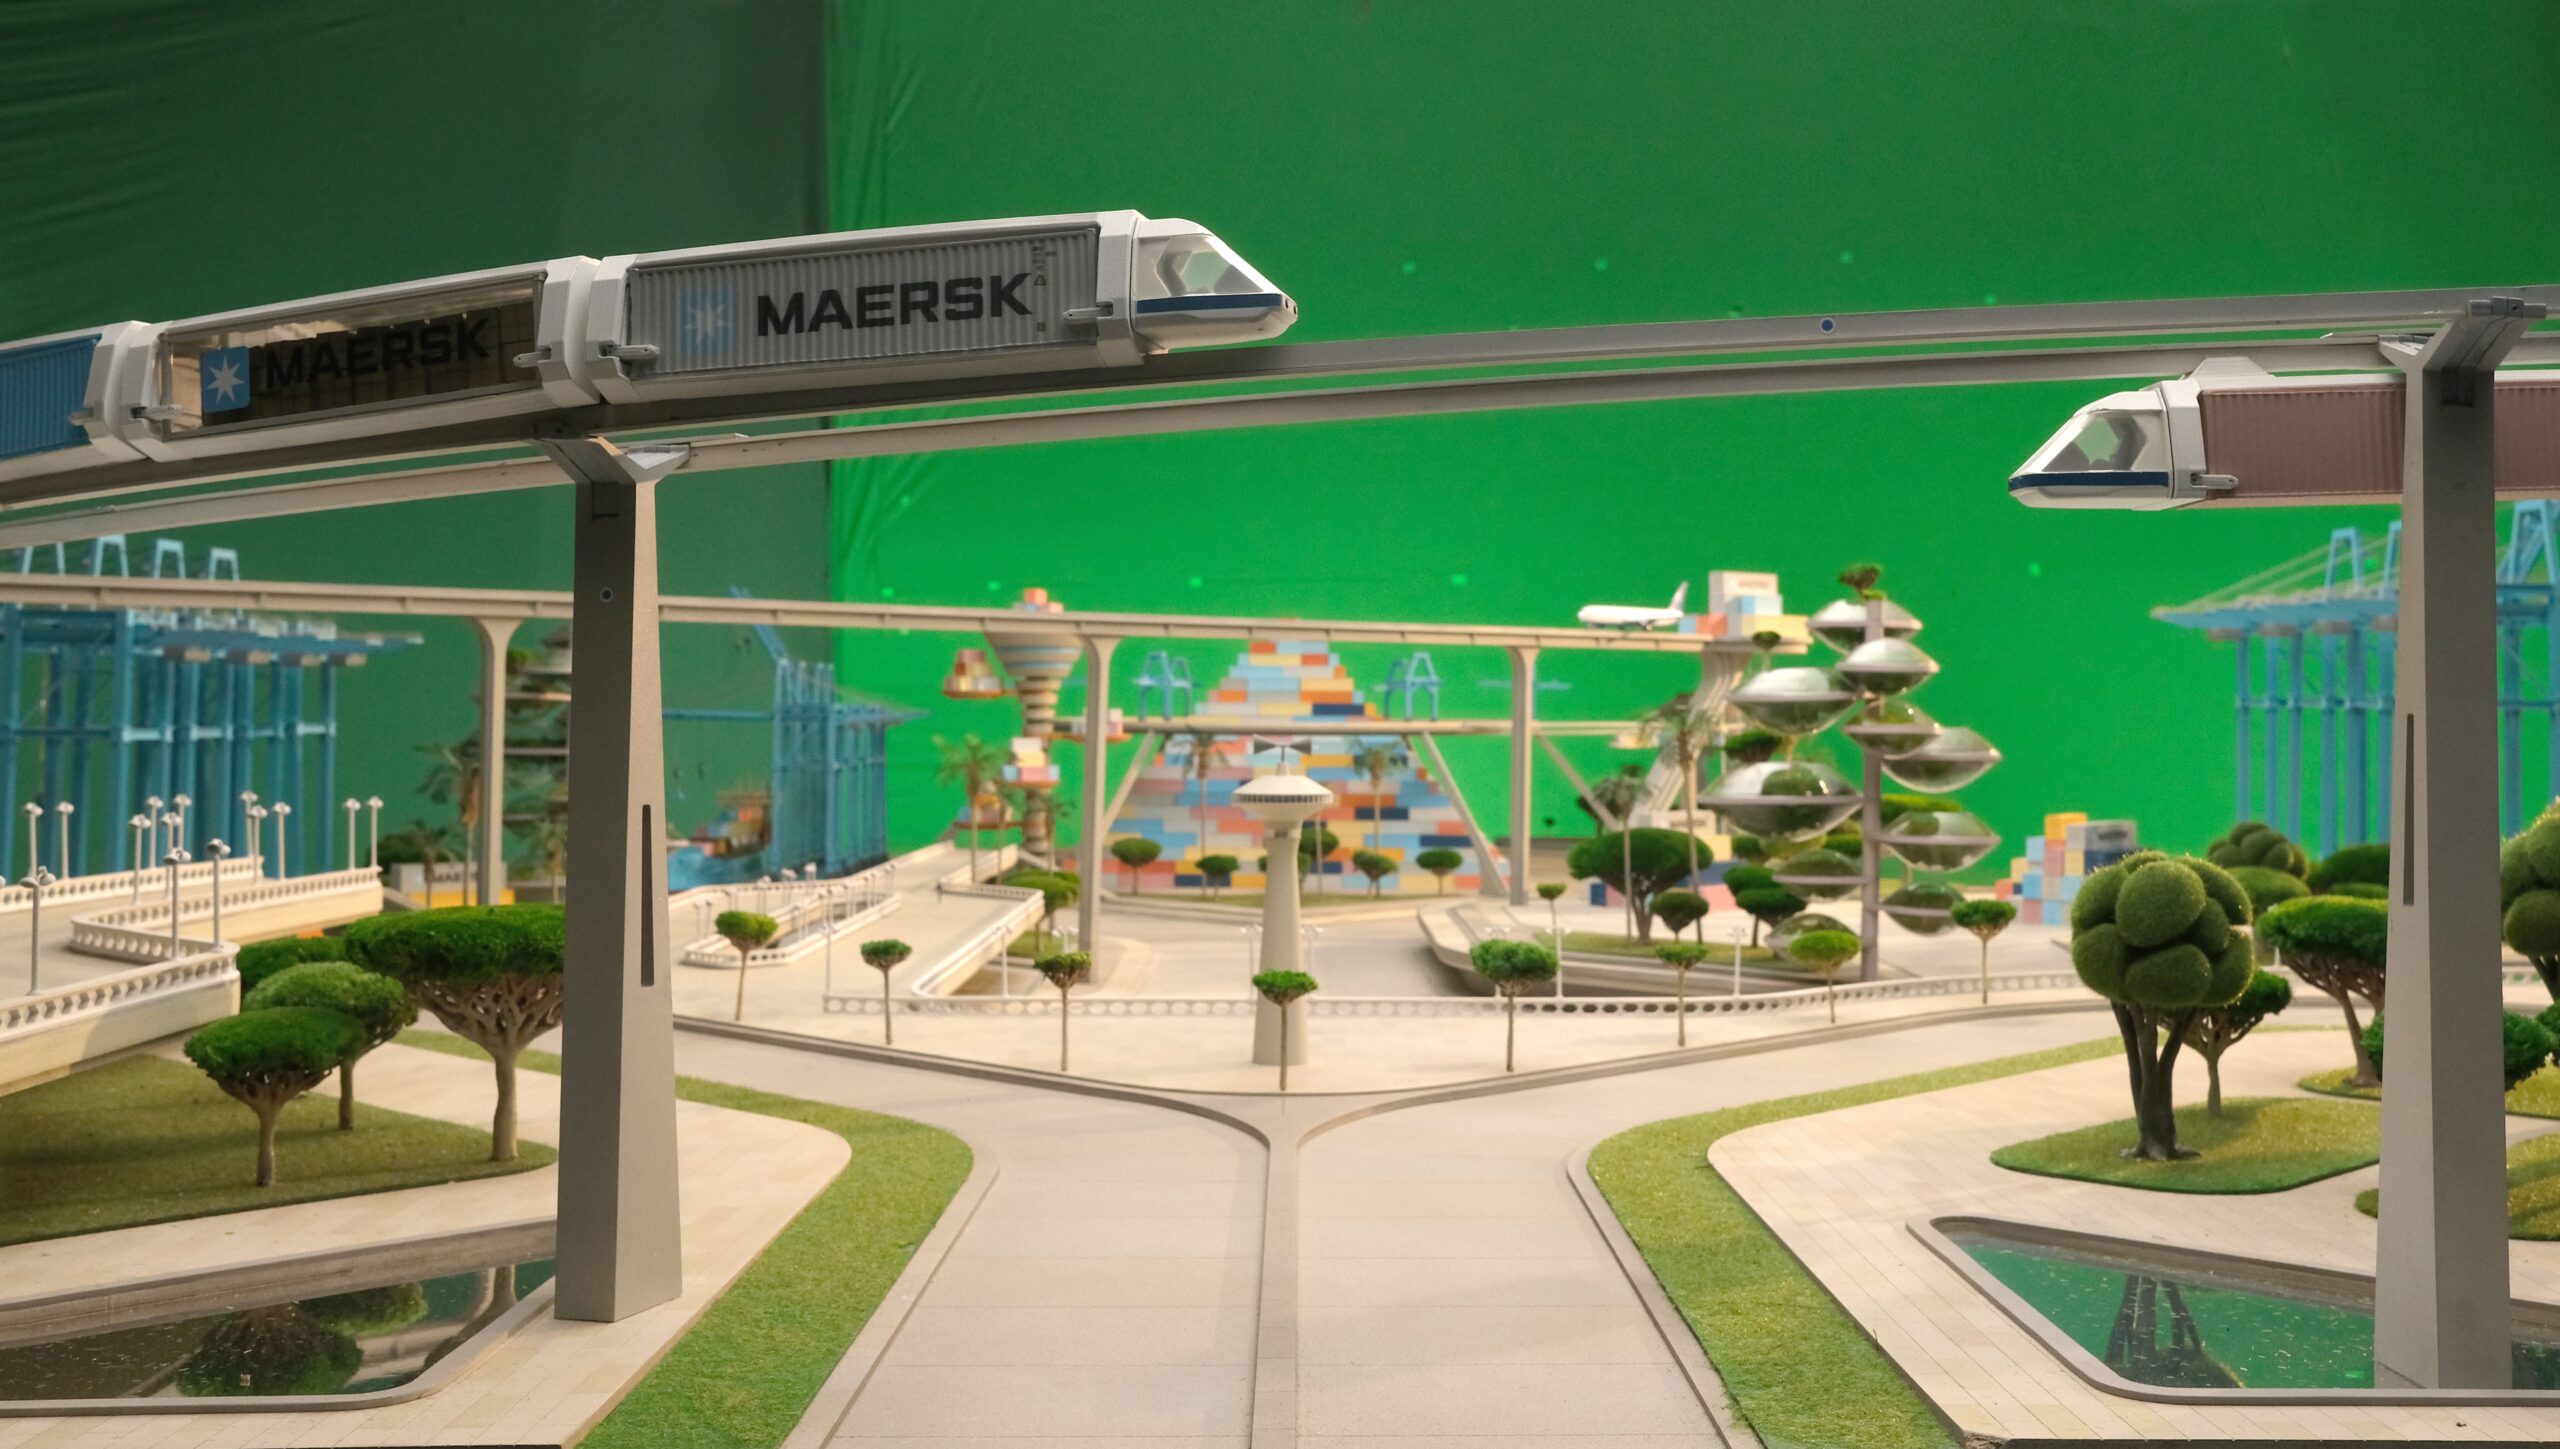 Maersk / Upside World Miniature